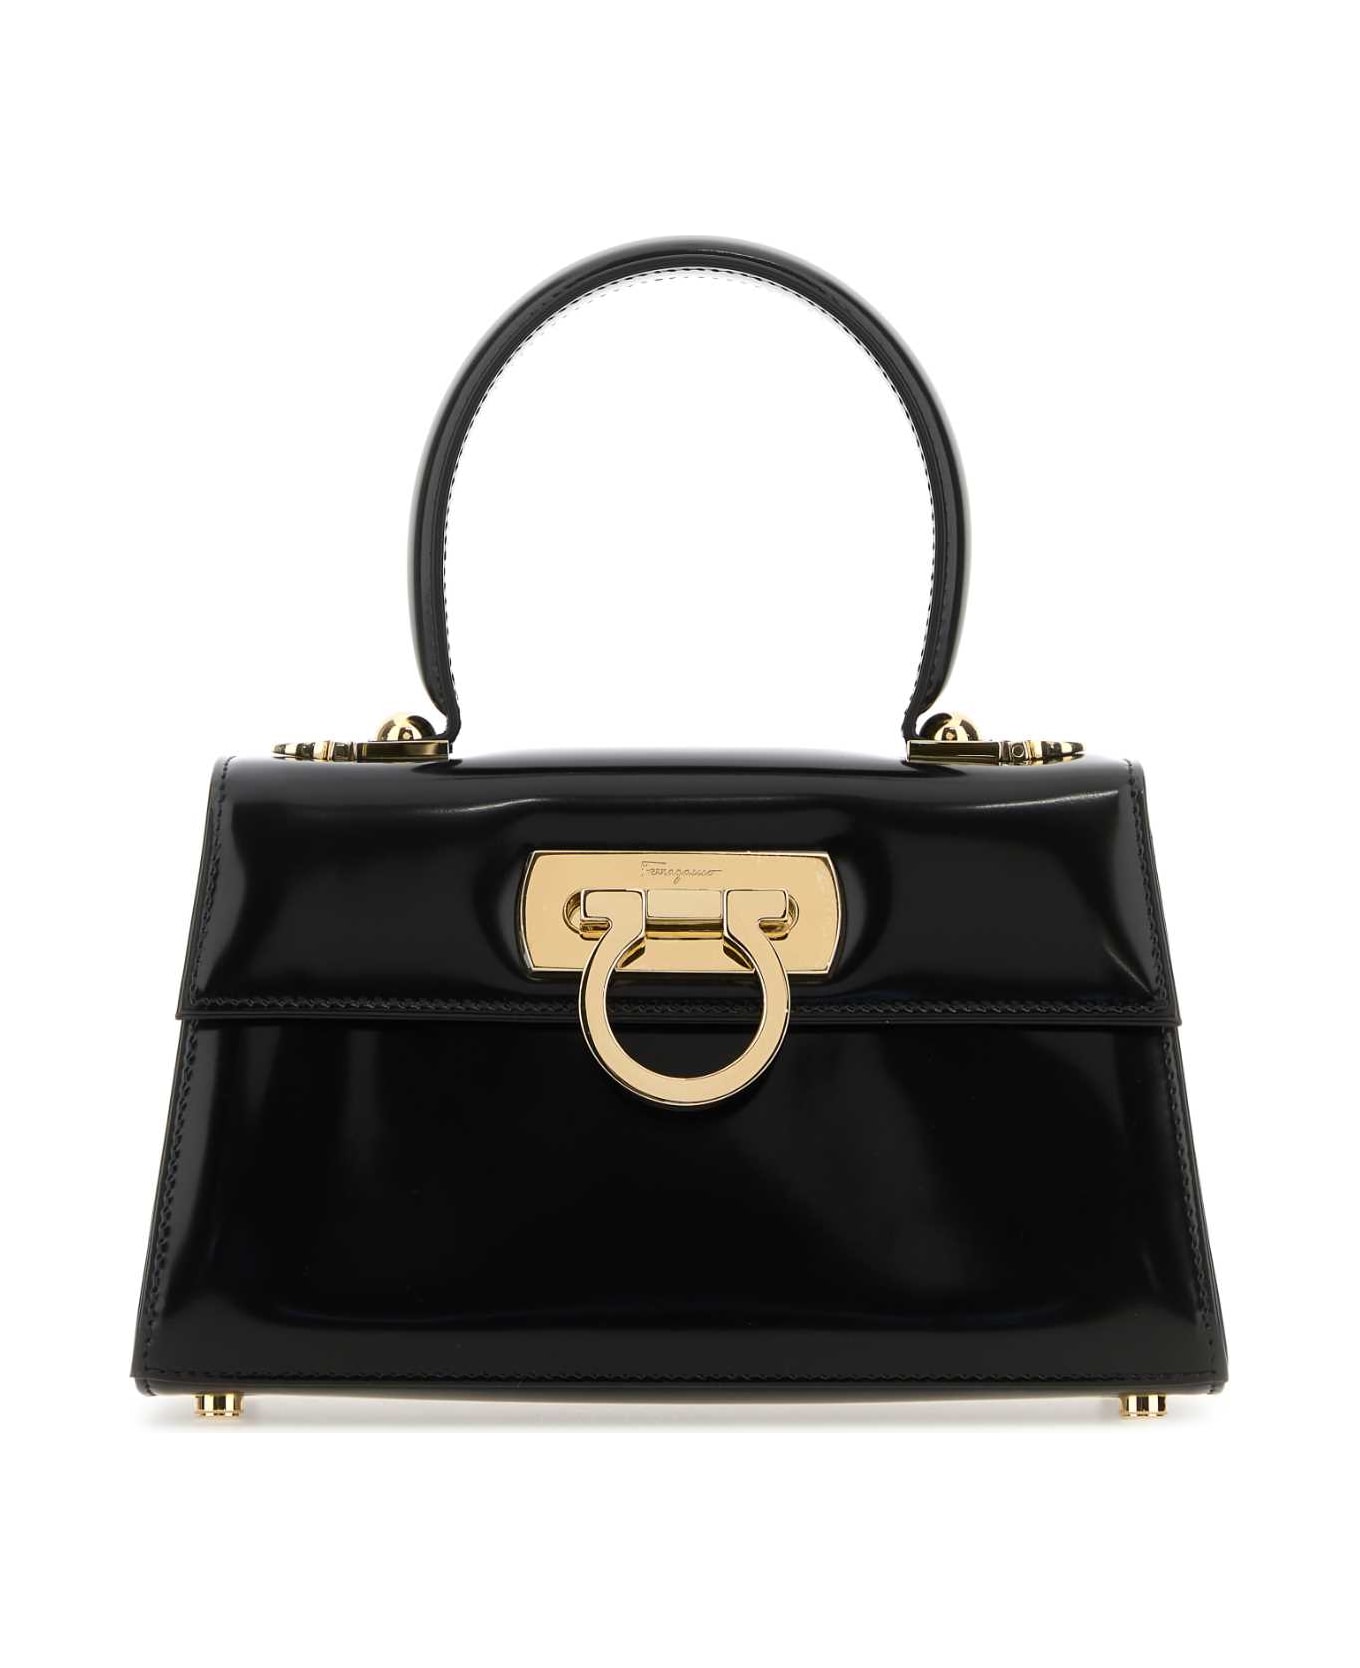 Ferragamo Black Leather Mini Iconic Handbag - NERONERONERO トートバッグ